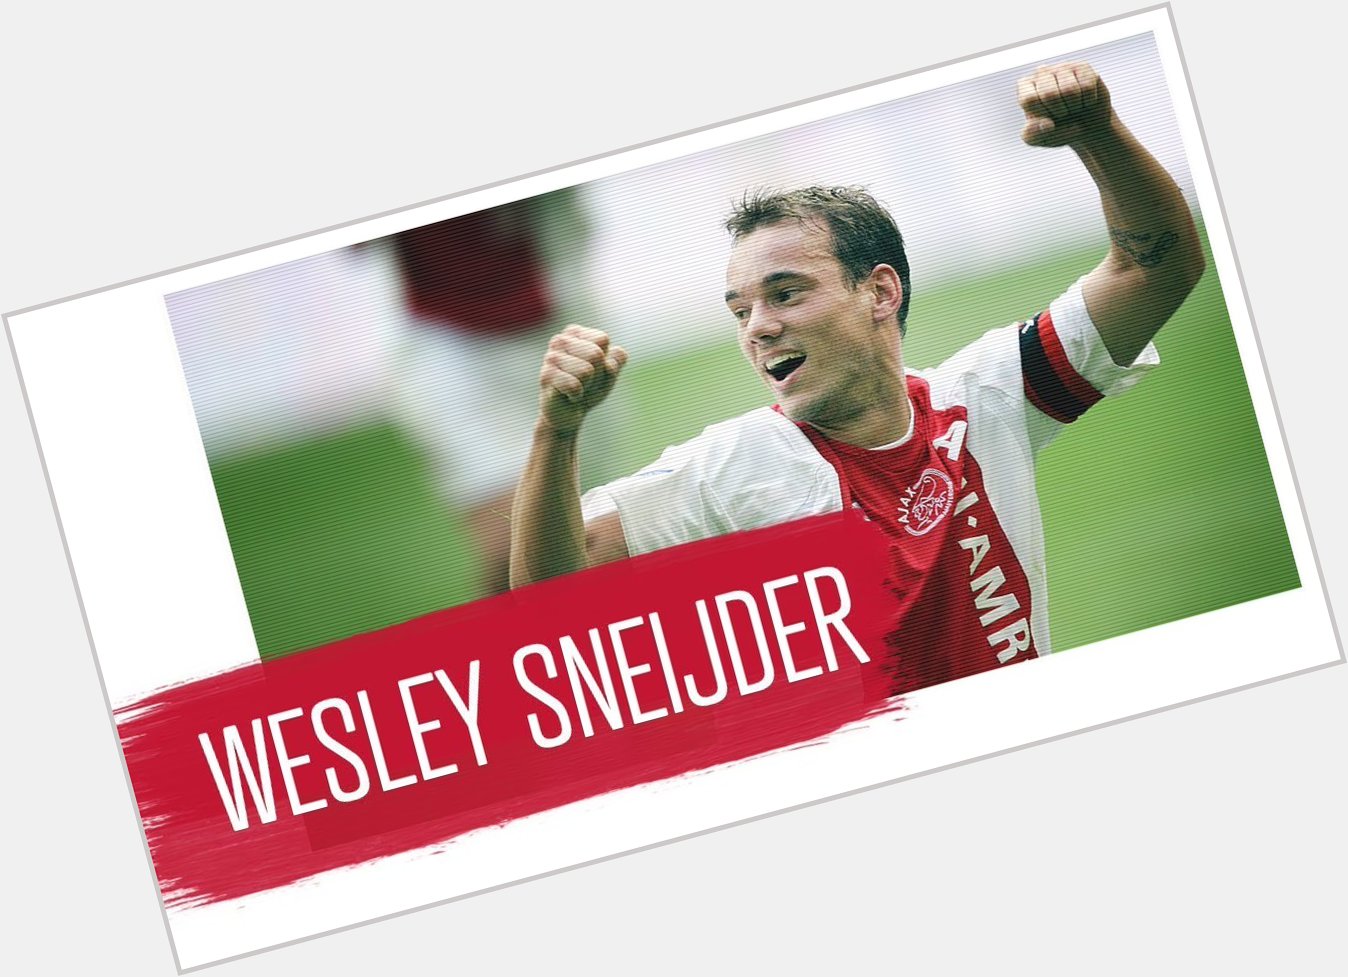 Happy birthday Wesley Sneijder!  